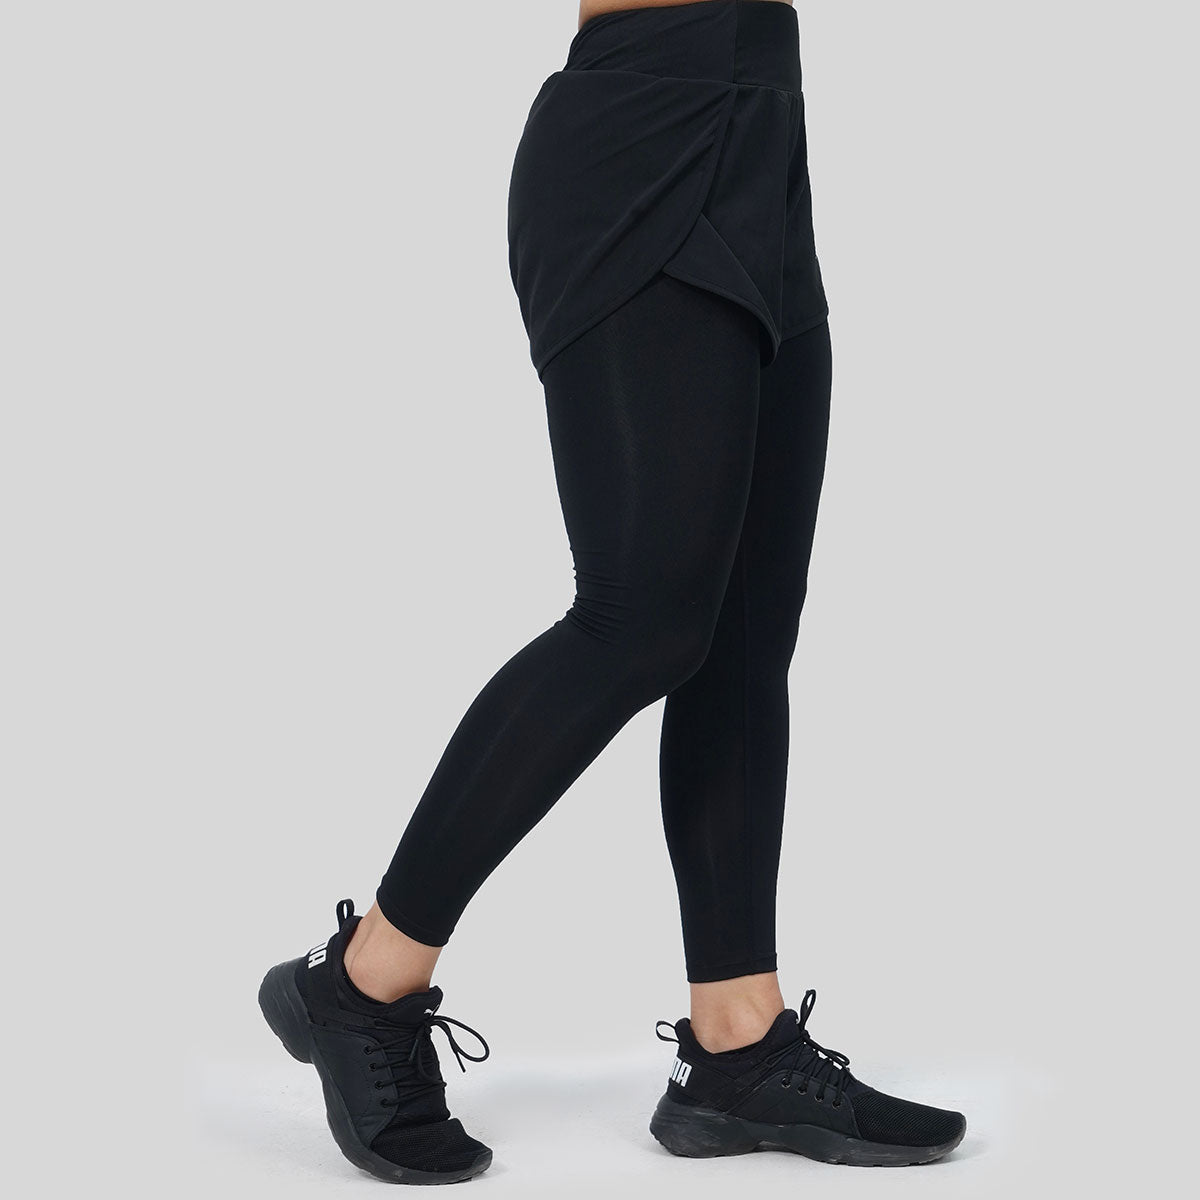 Compression Legging Shorts (Black)